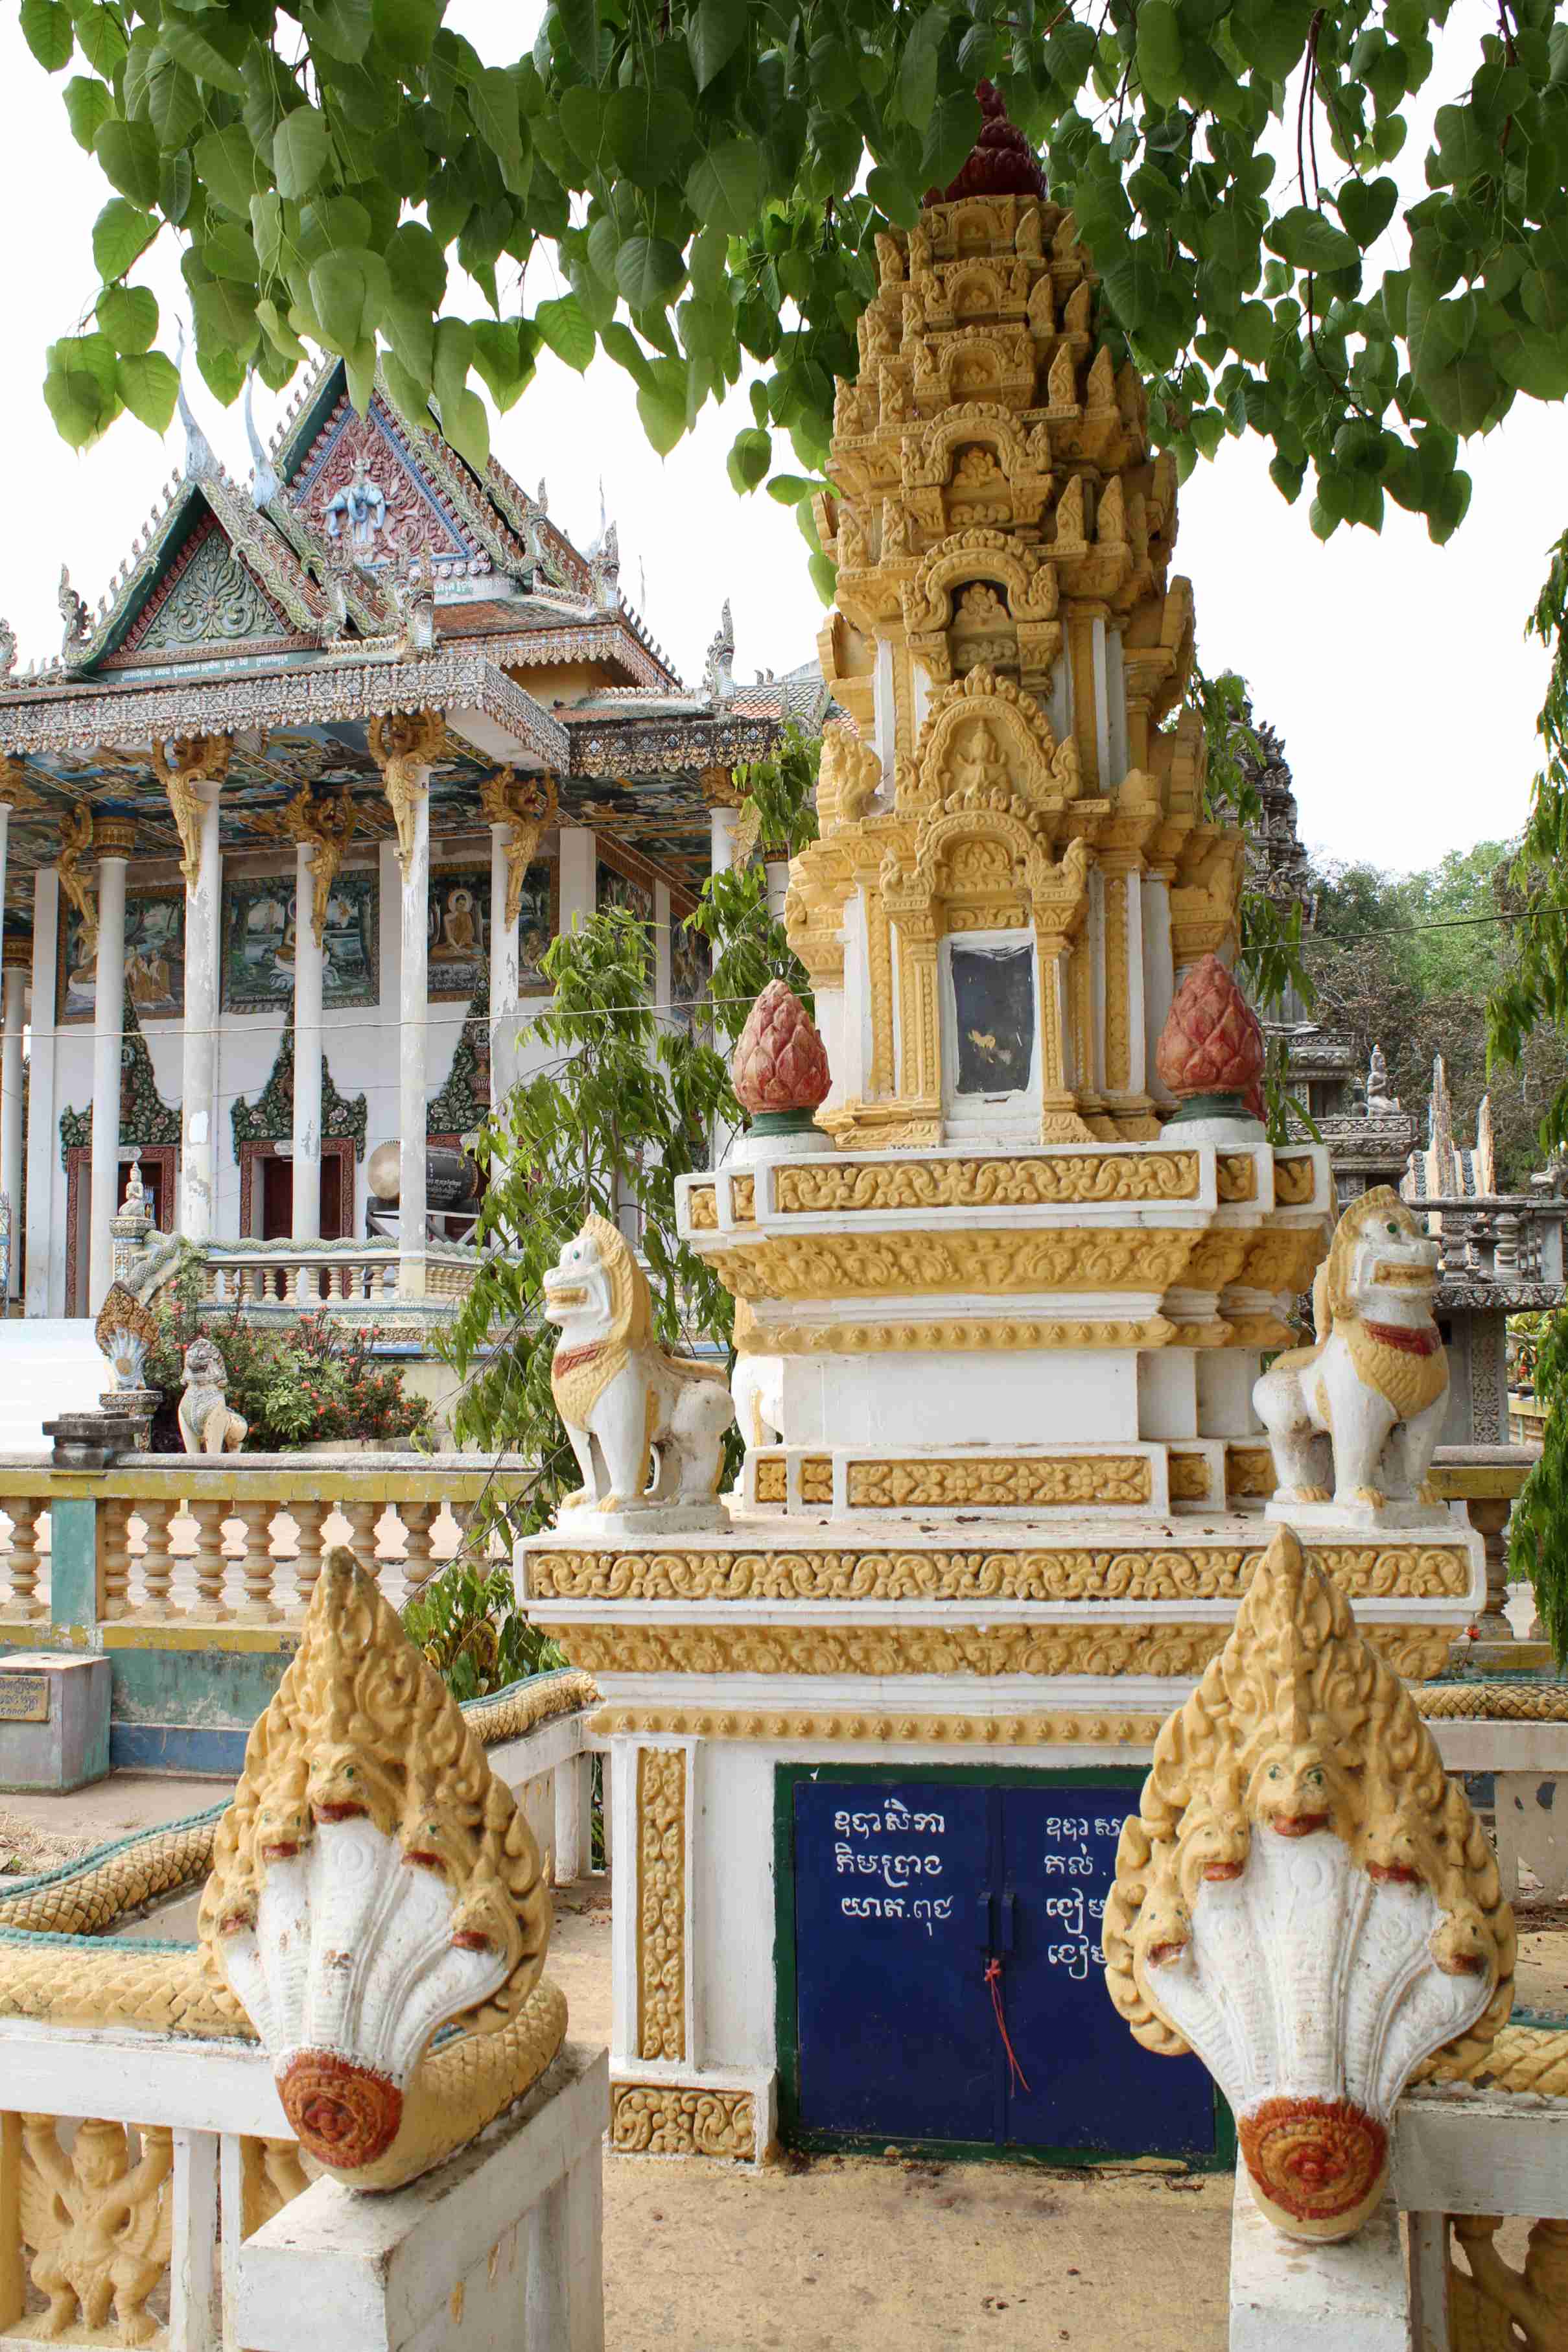 Architecture à Battambang.